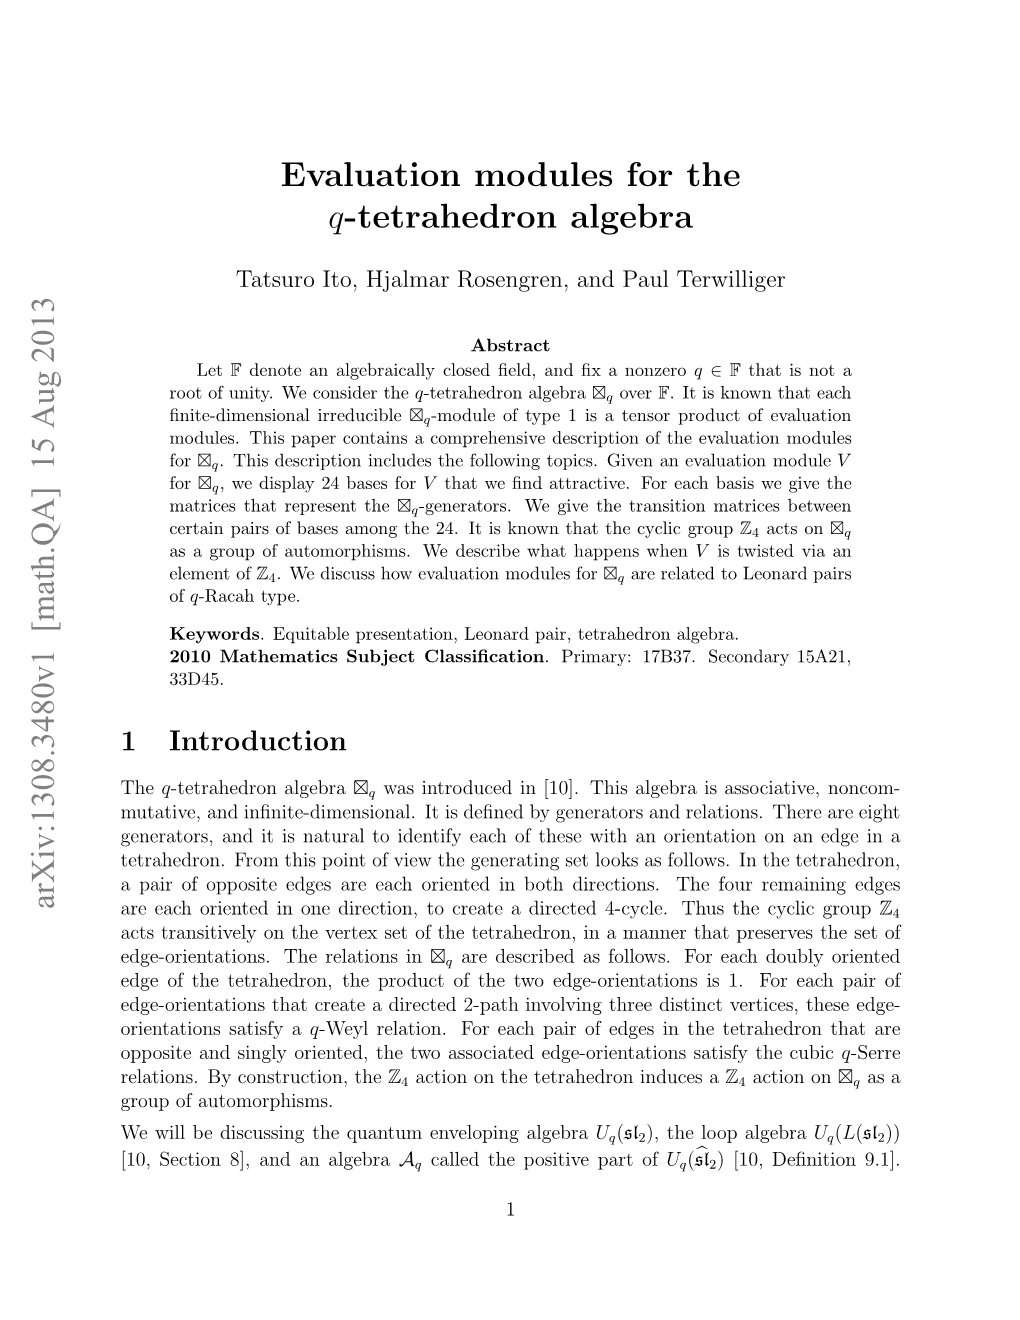 Evaluation Modules for the $ Q $-Tetrahedron Algebra